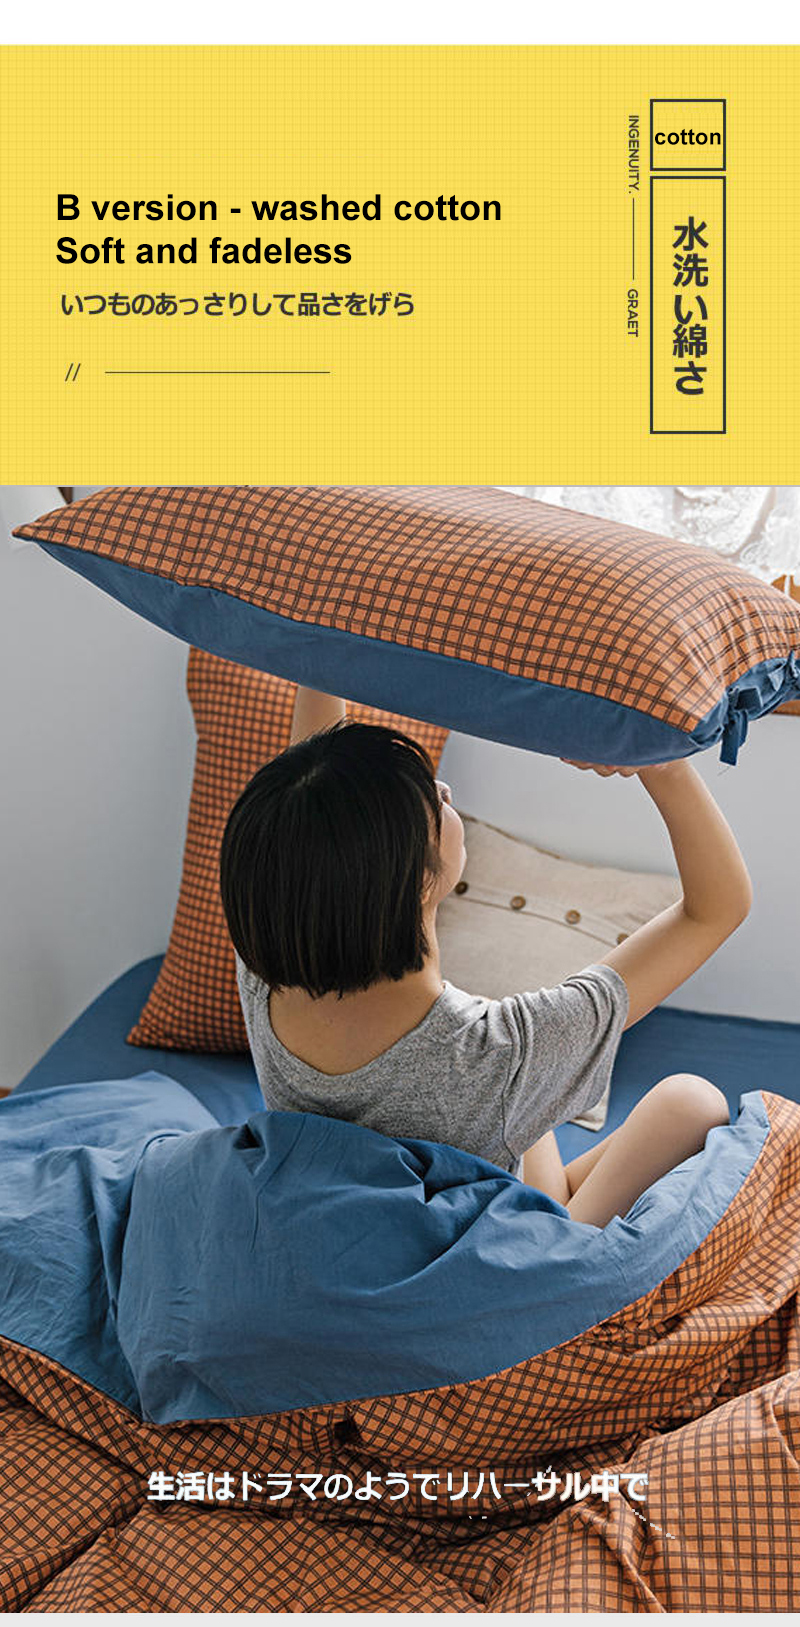 Queen Bed Wholesale Bed Sheet